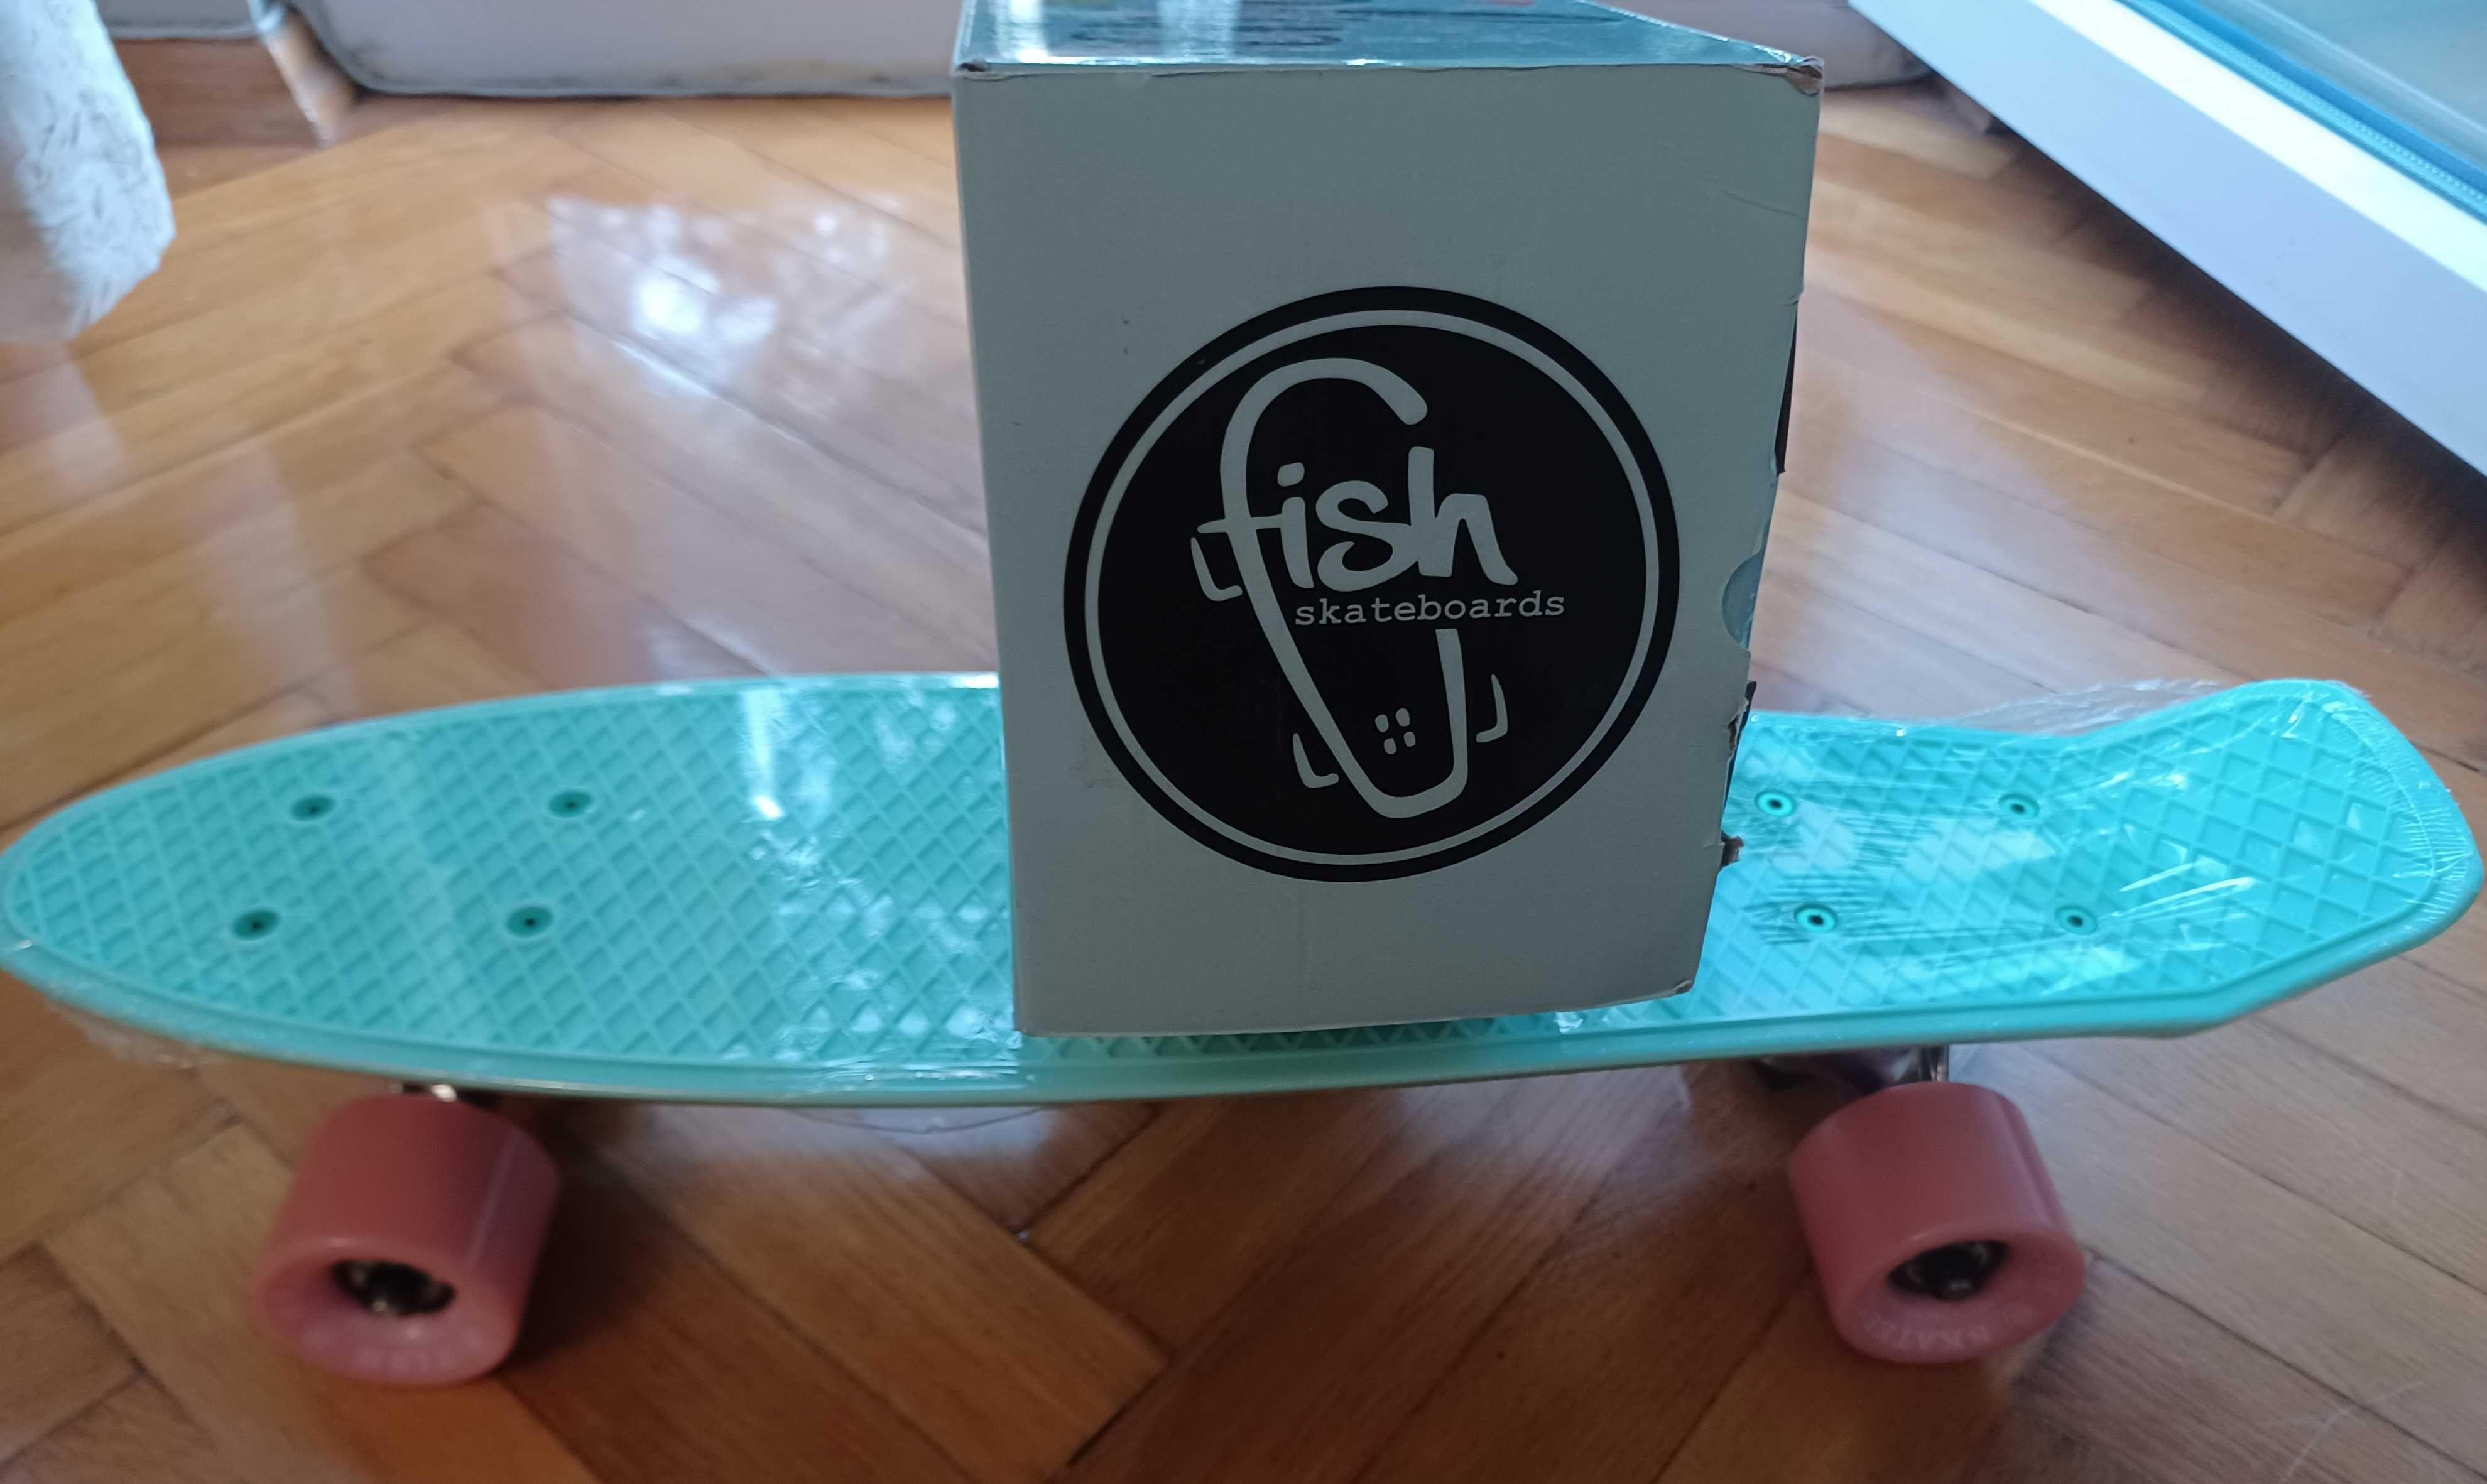 Deskorolka Fish skateboards